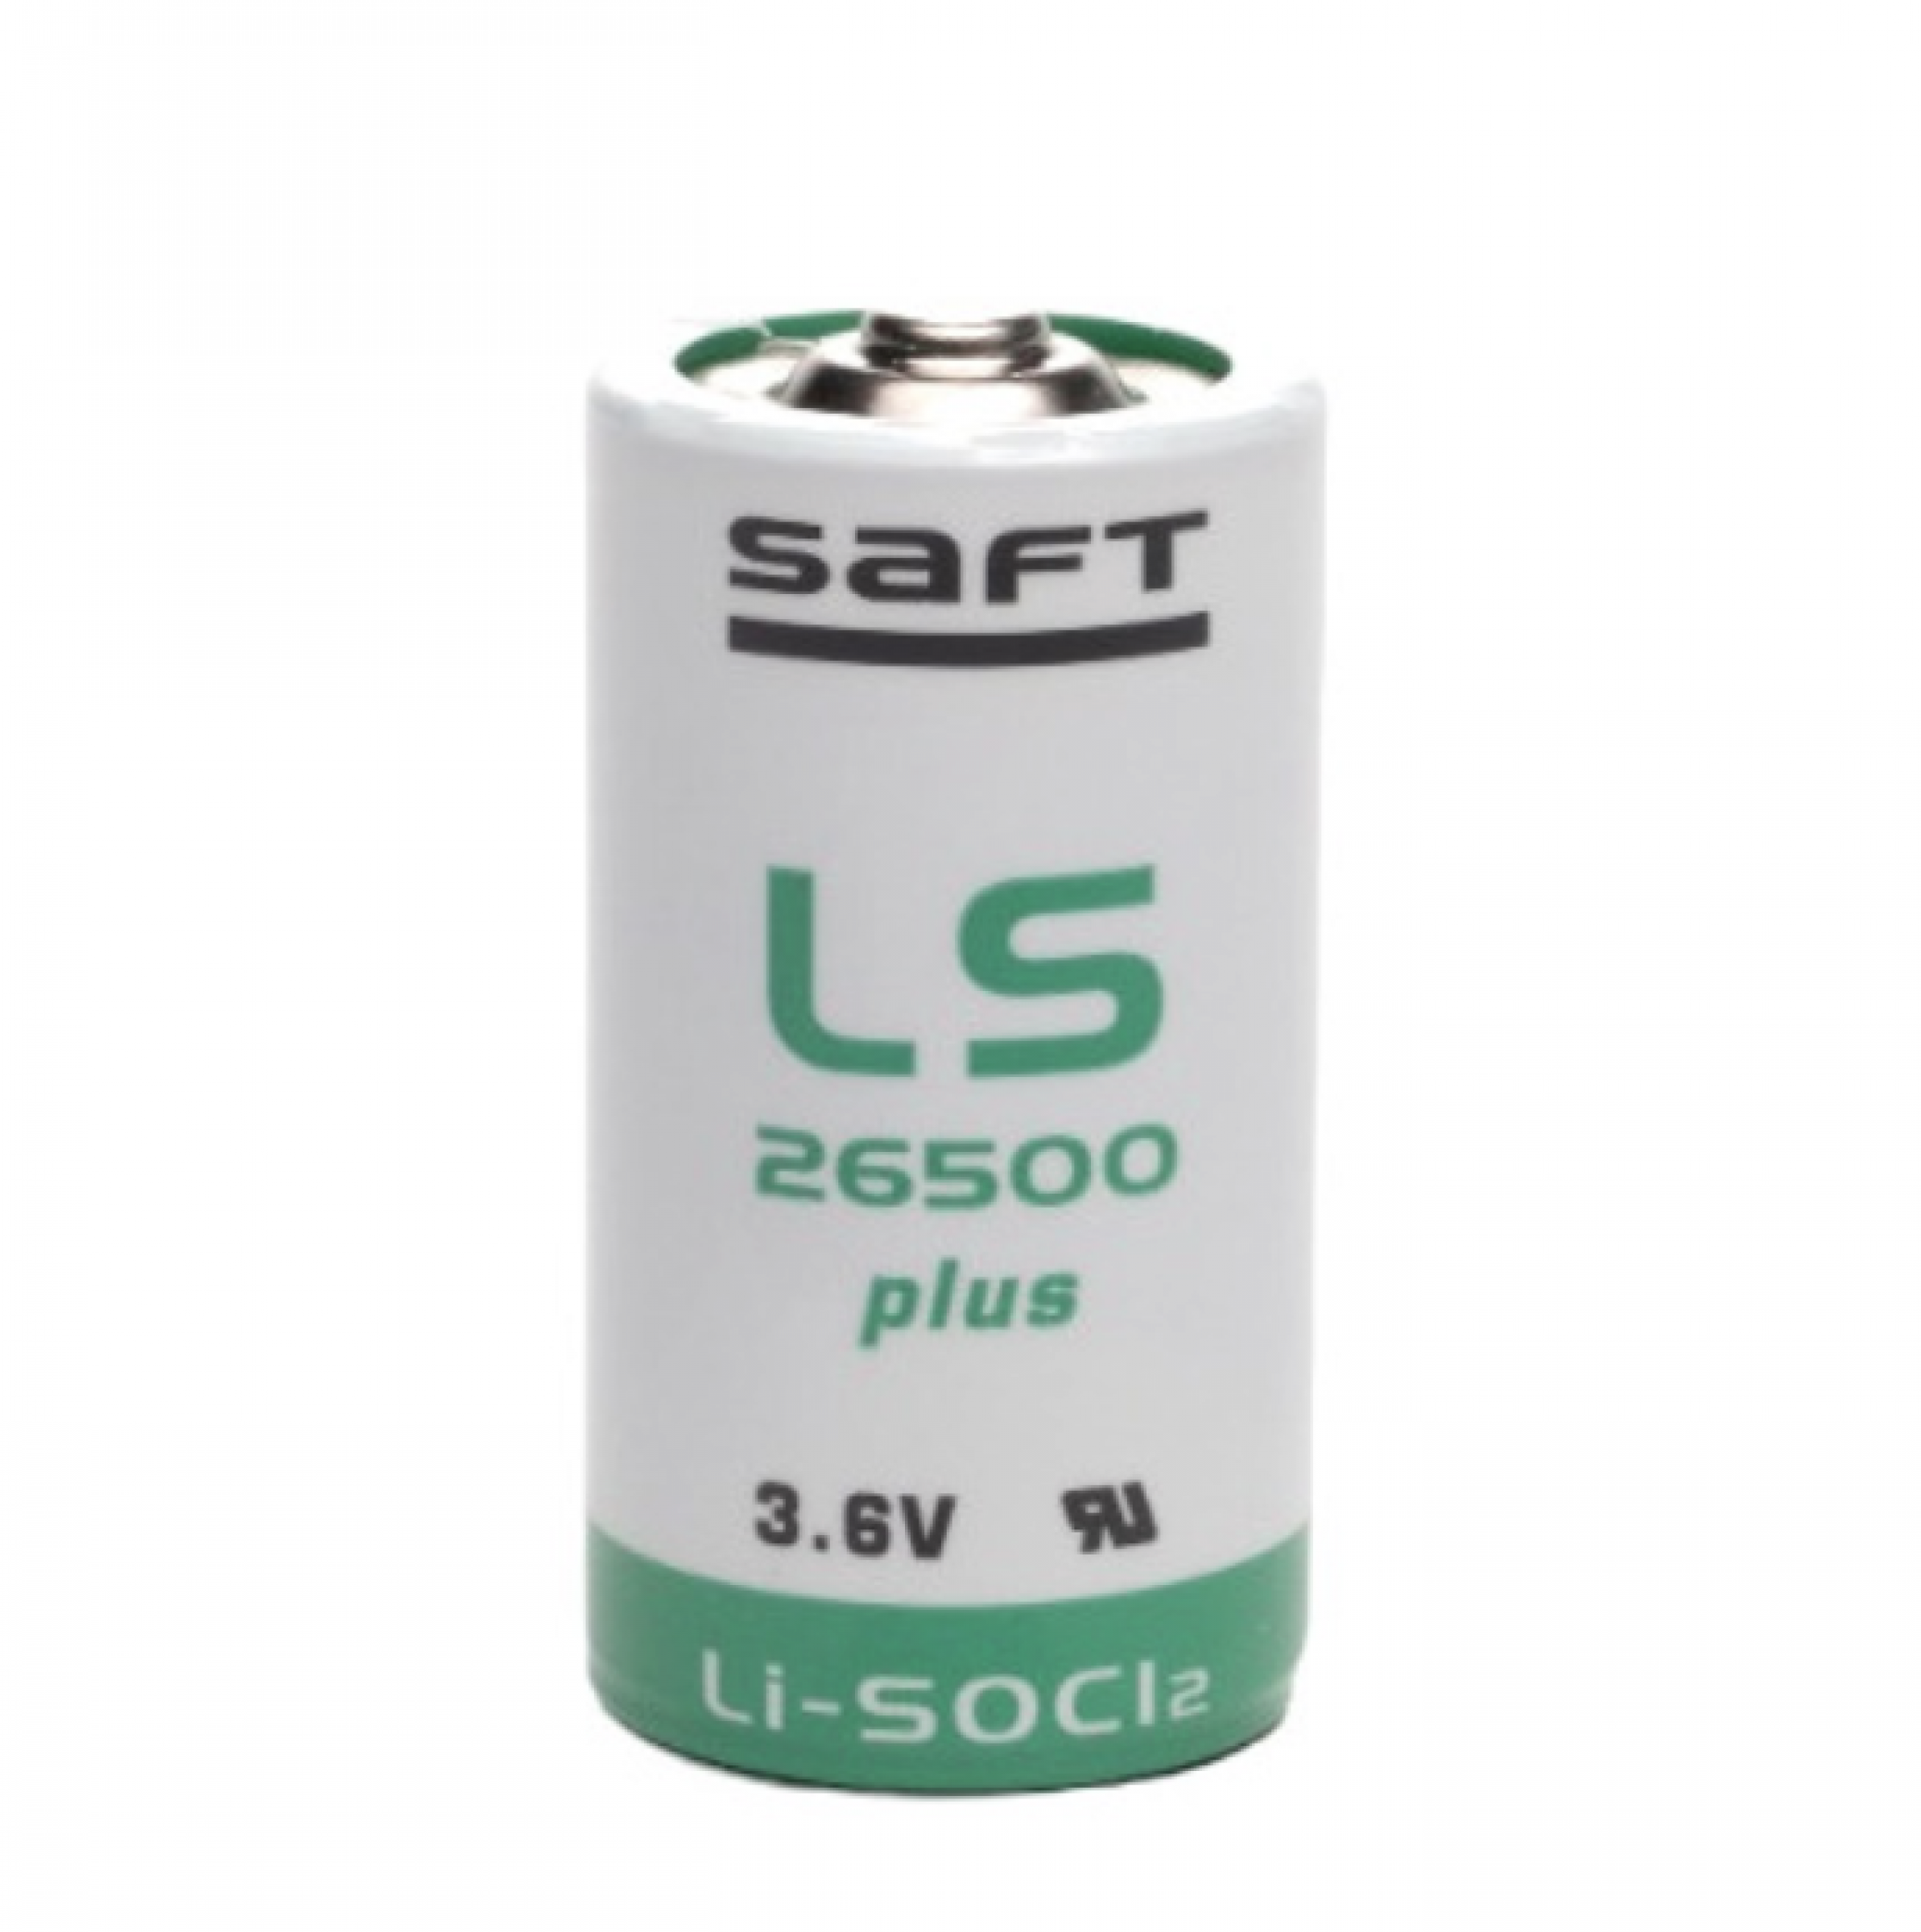 Saft LS26500 Plus ER-C Lithium-Thionylchlorid Baby 3,6V